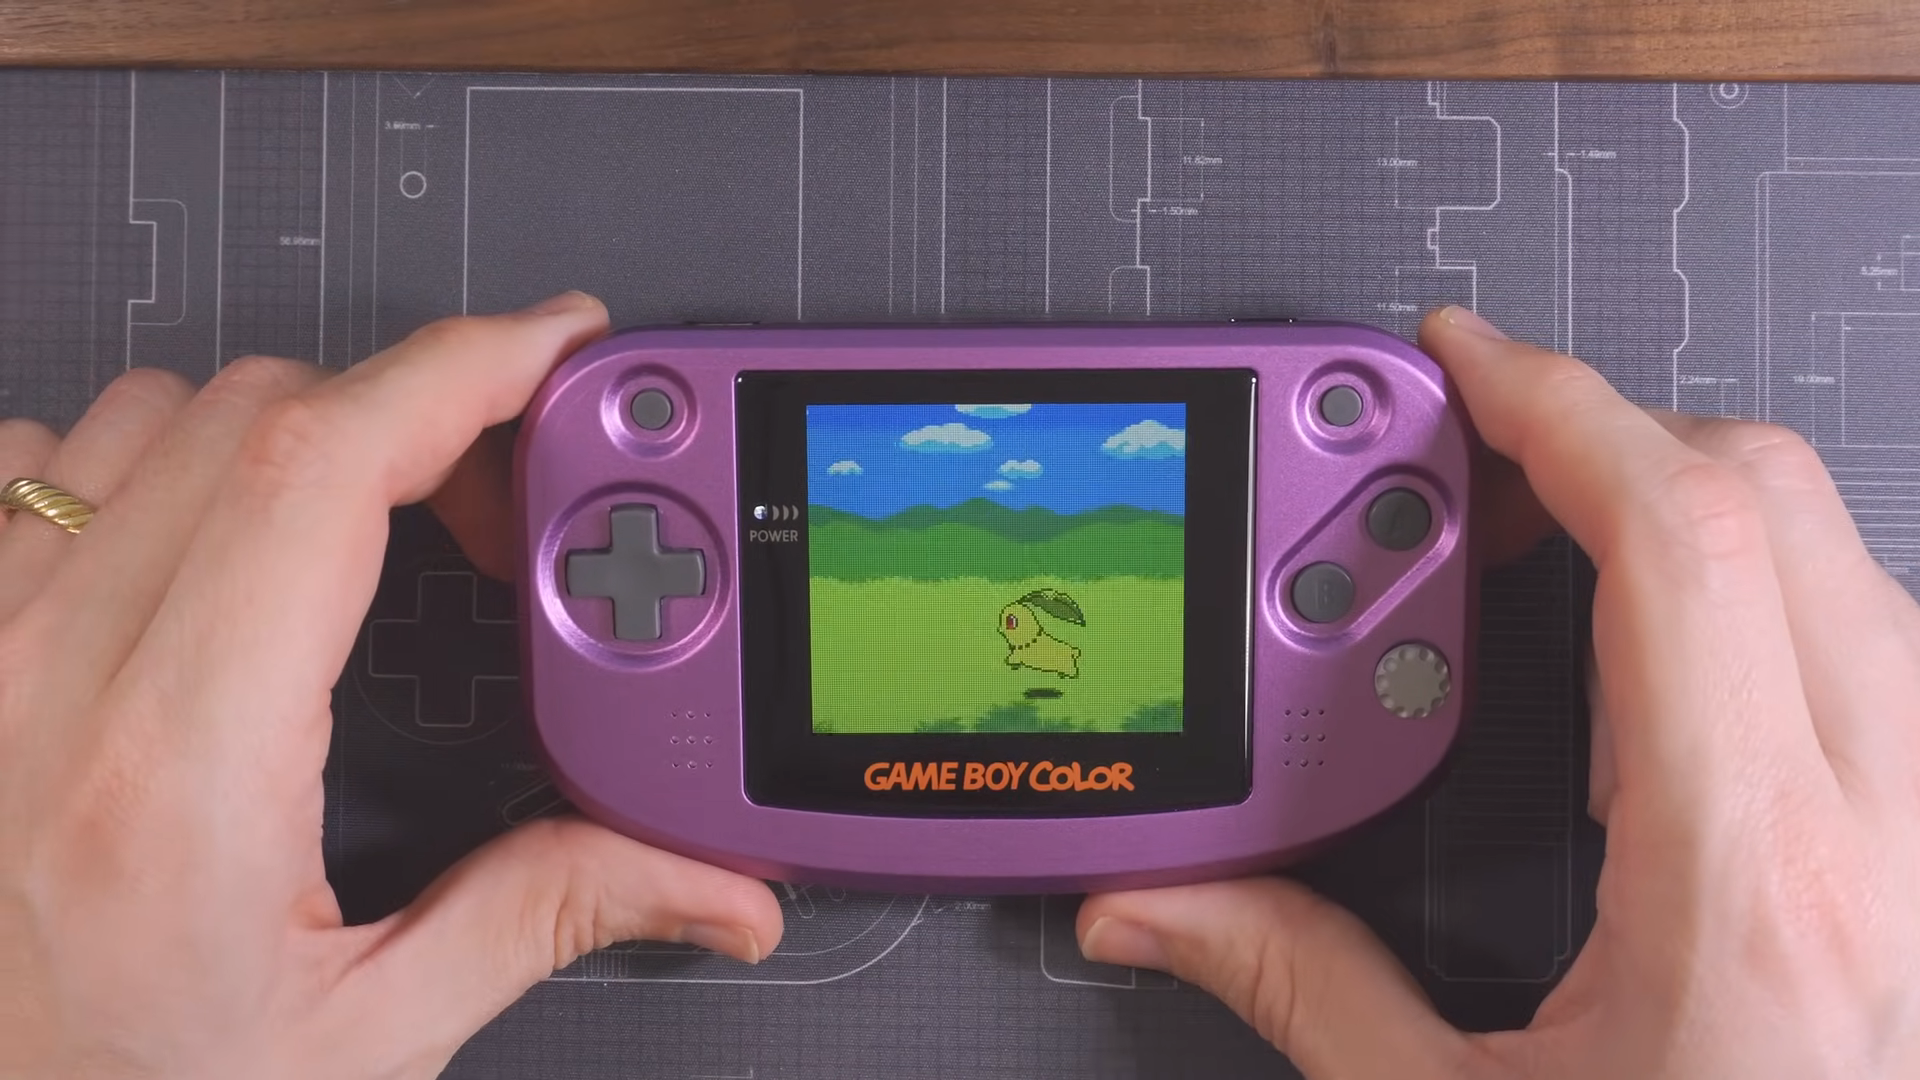 Game Boy Color System Purple For Sale Nintendo